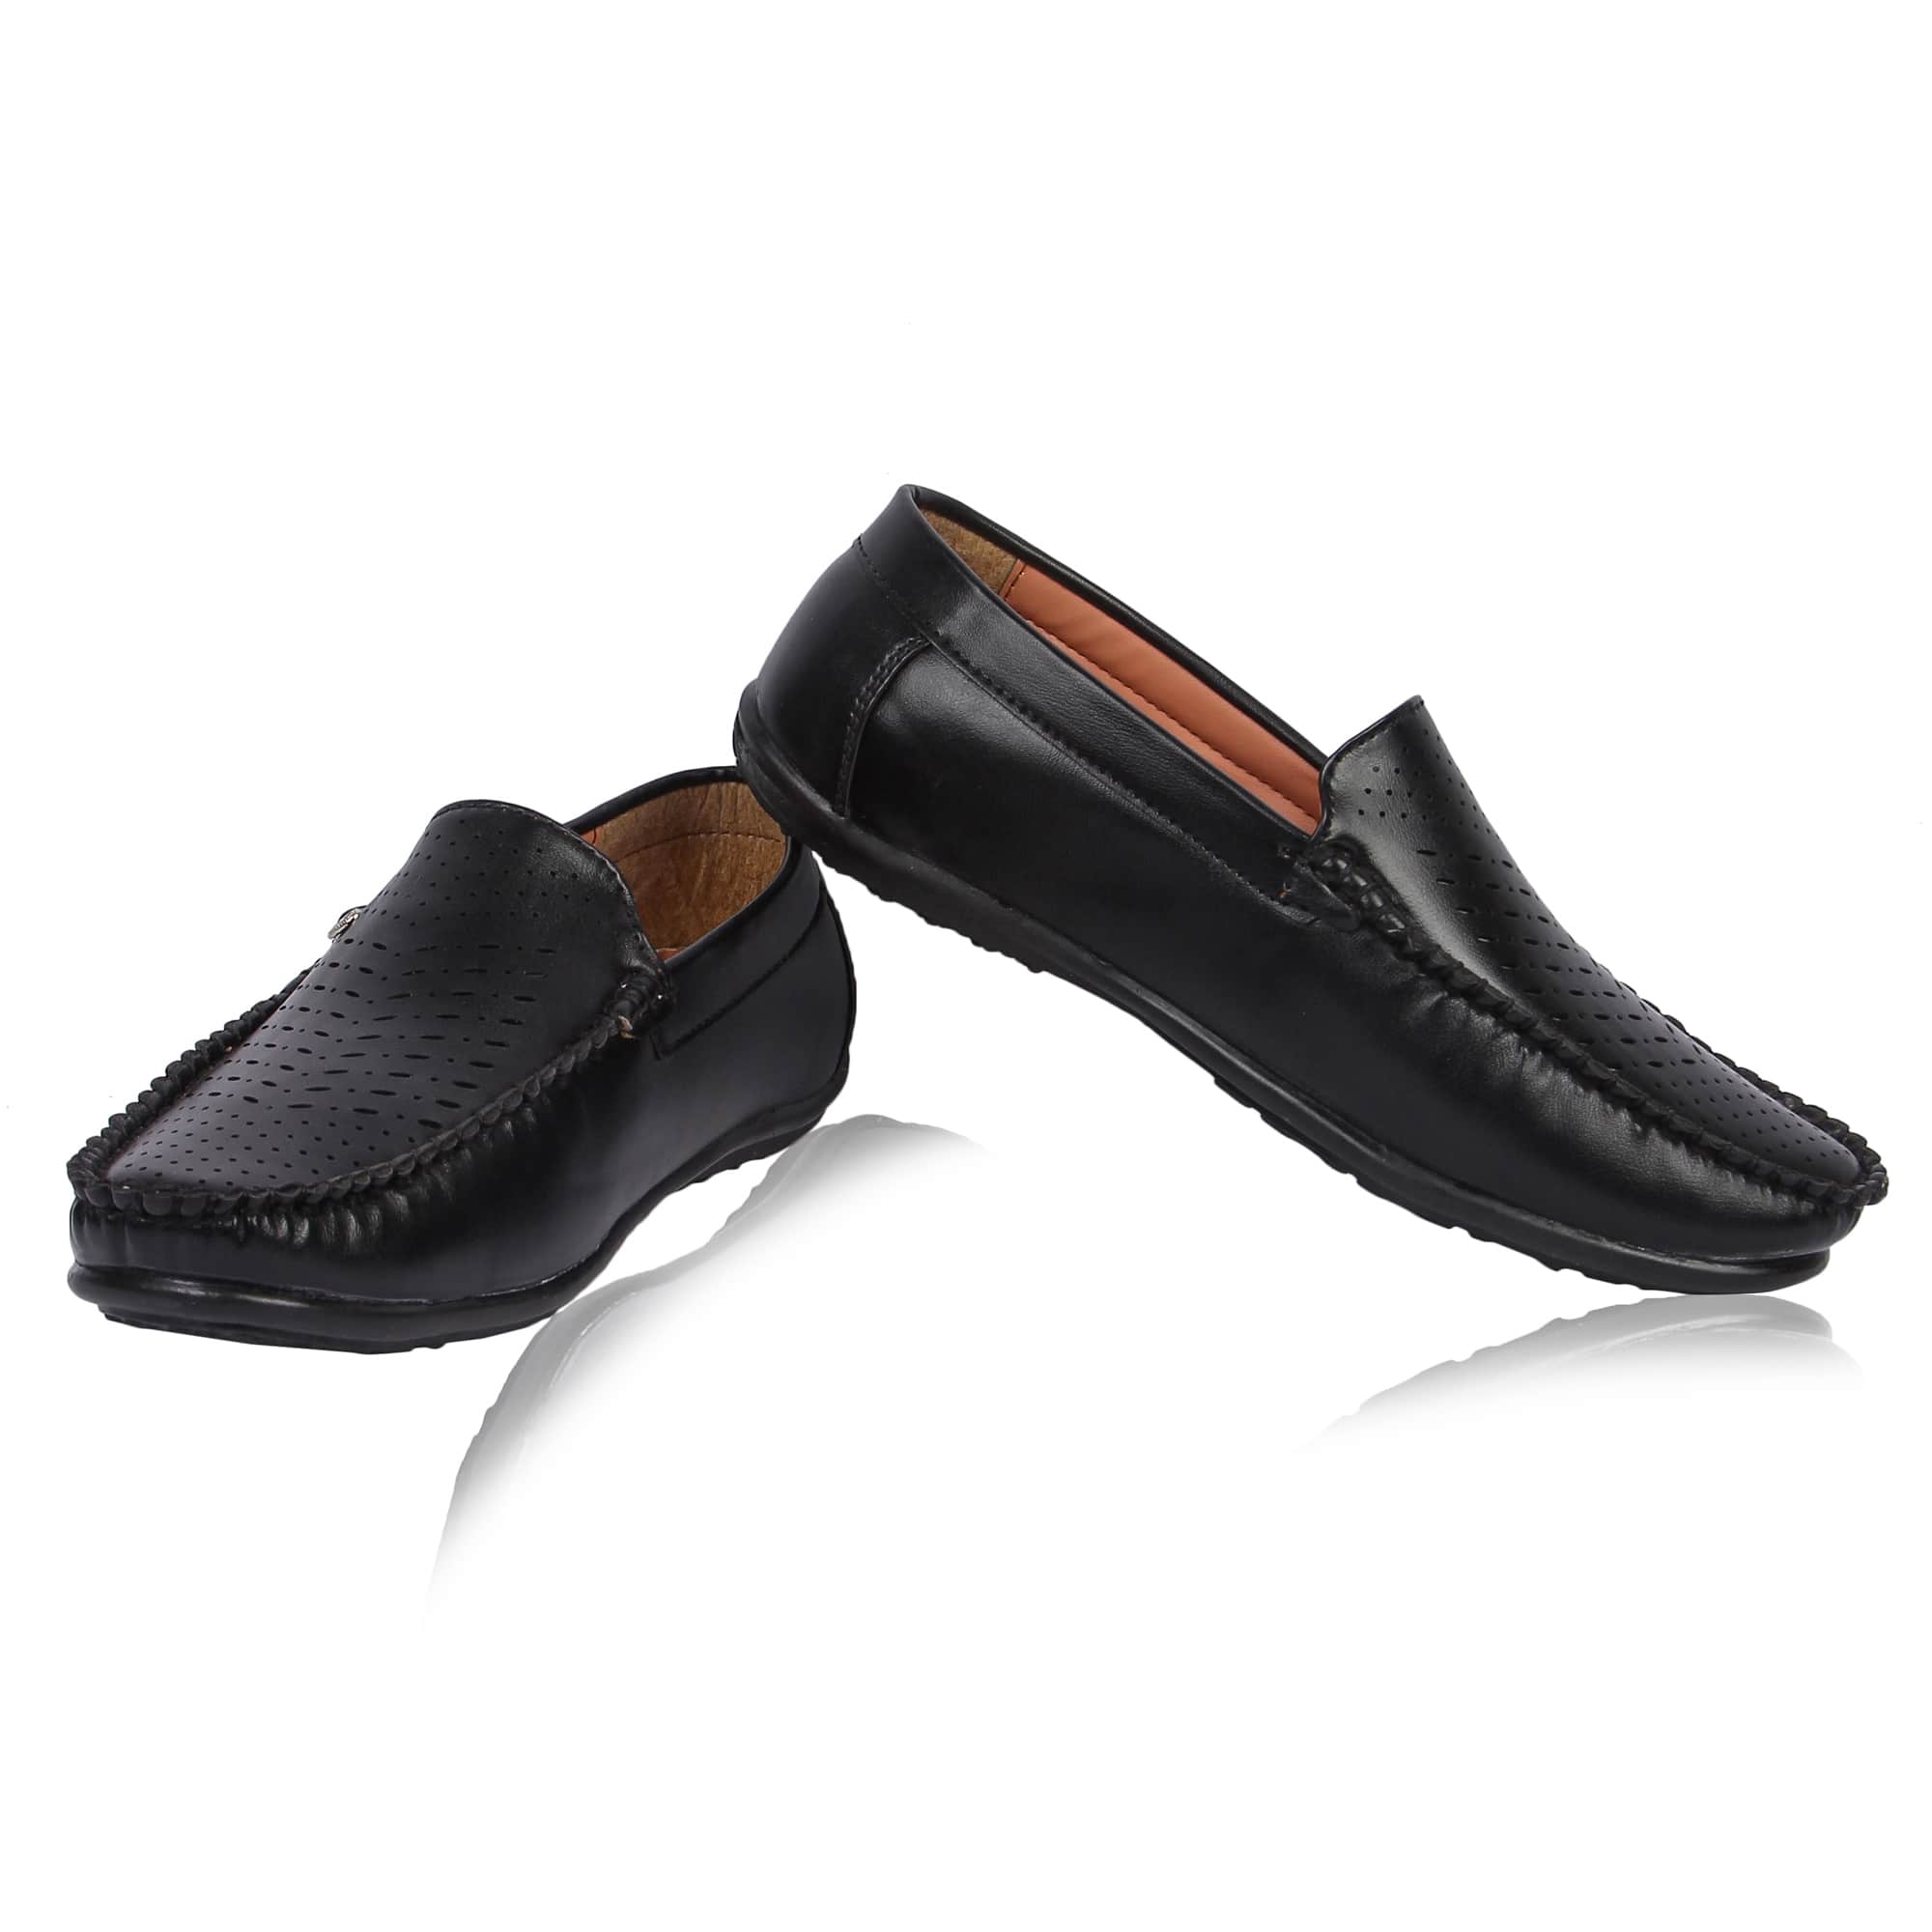 IMG_0142-min | Online Store for Men Footwear in India